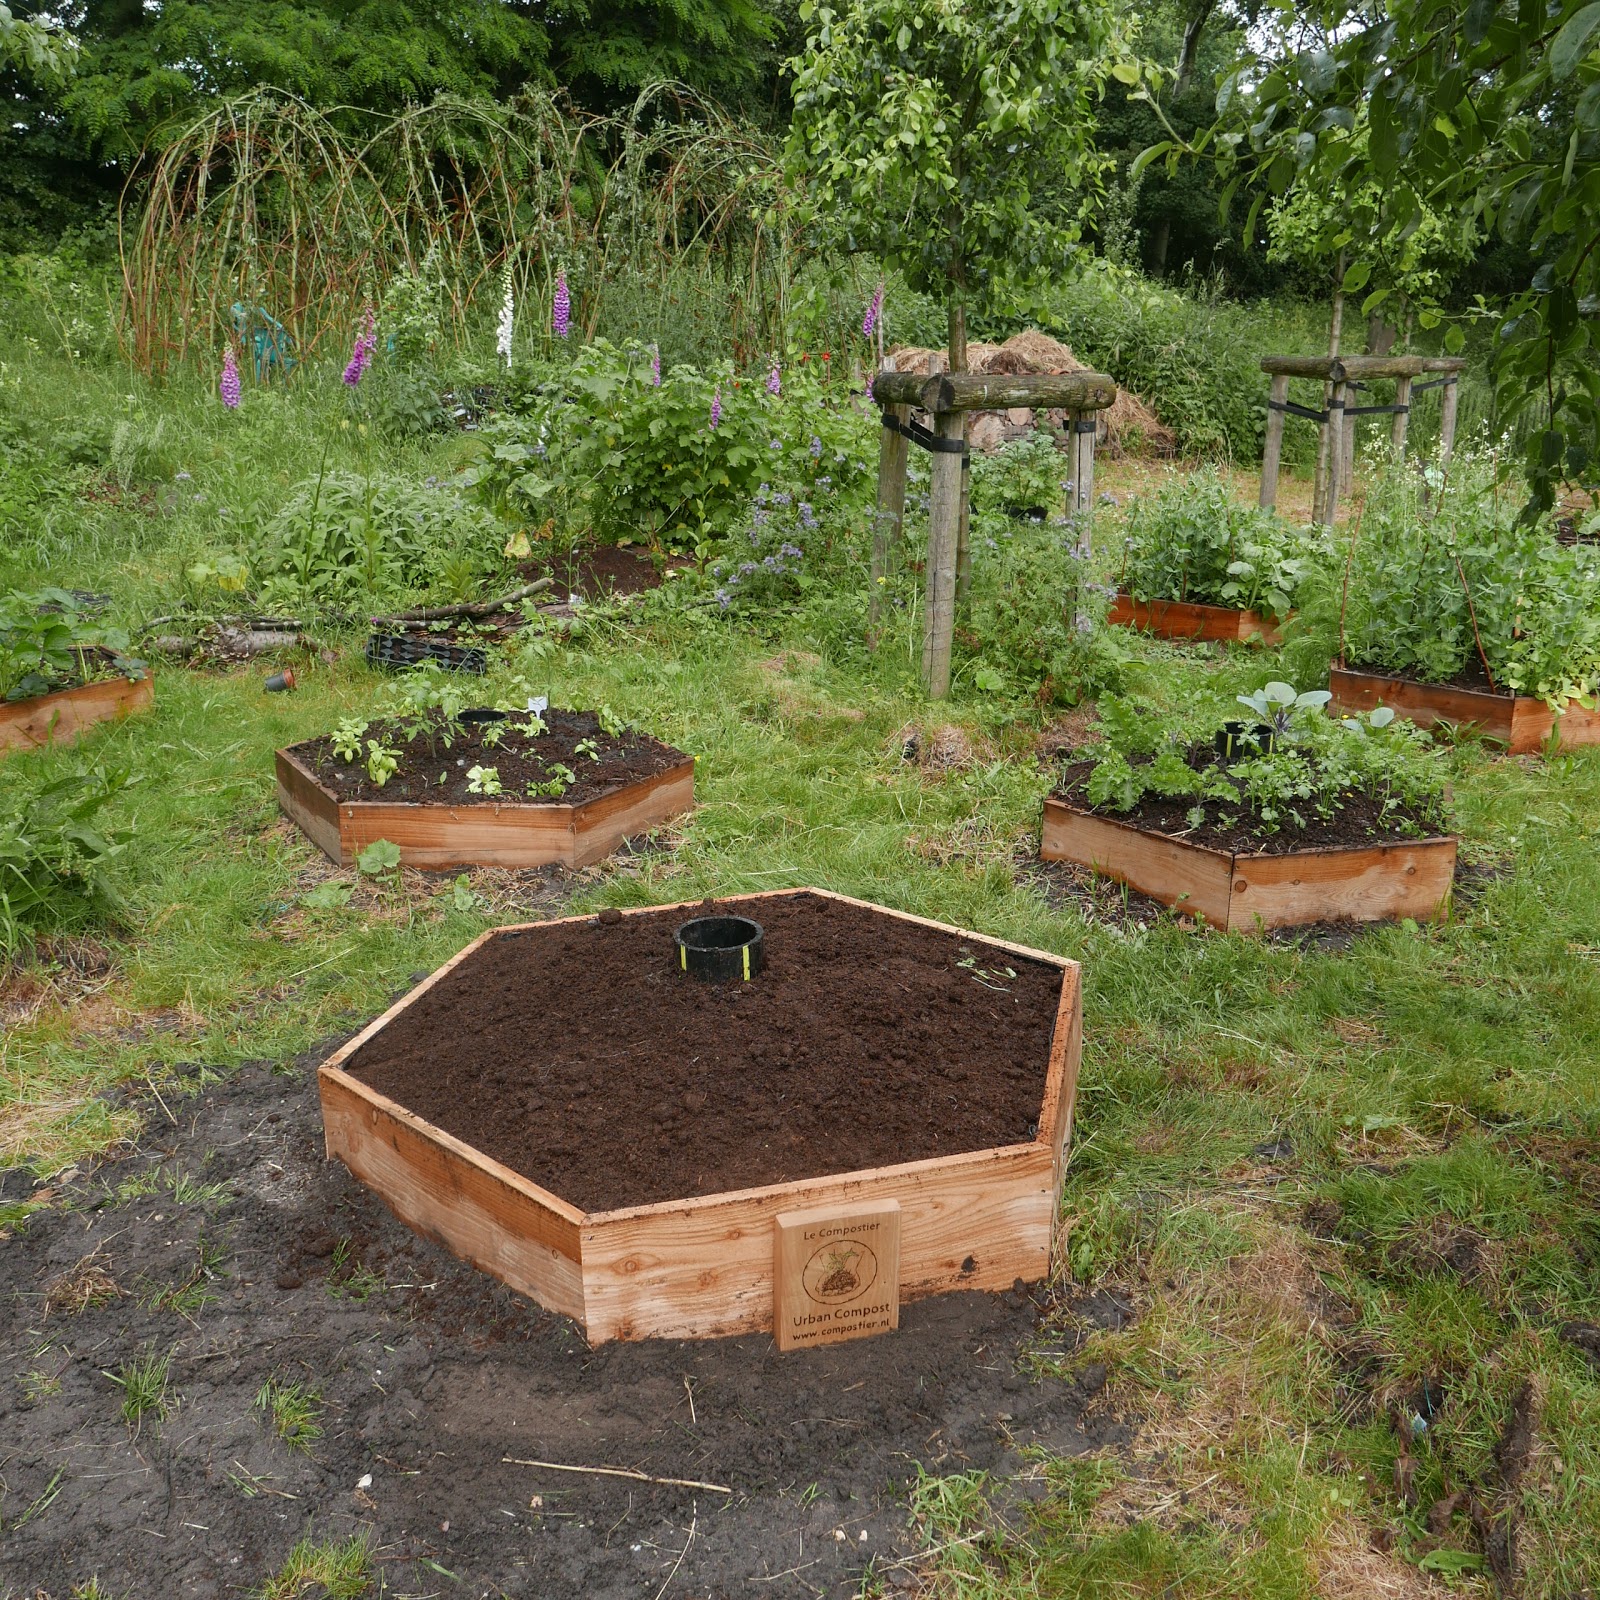 Le Compostier Back To Eden Gardening In A Honeycomb Gardenbox